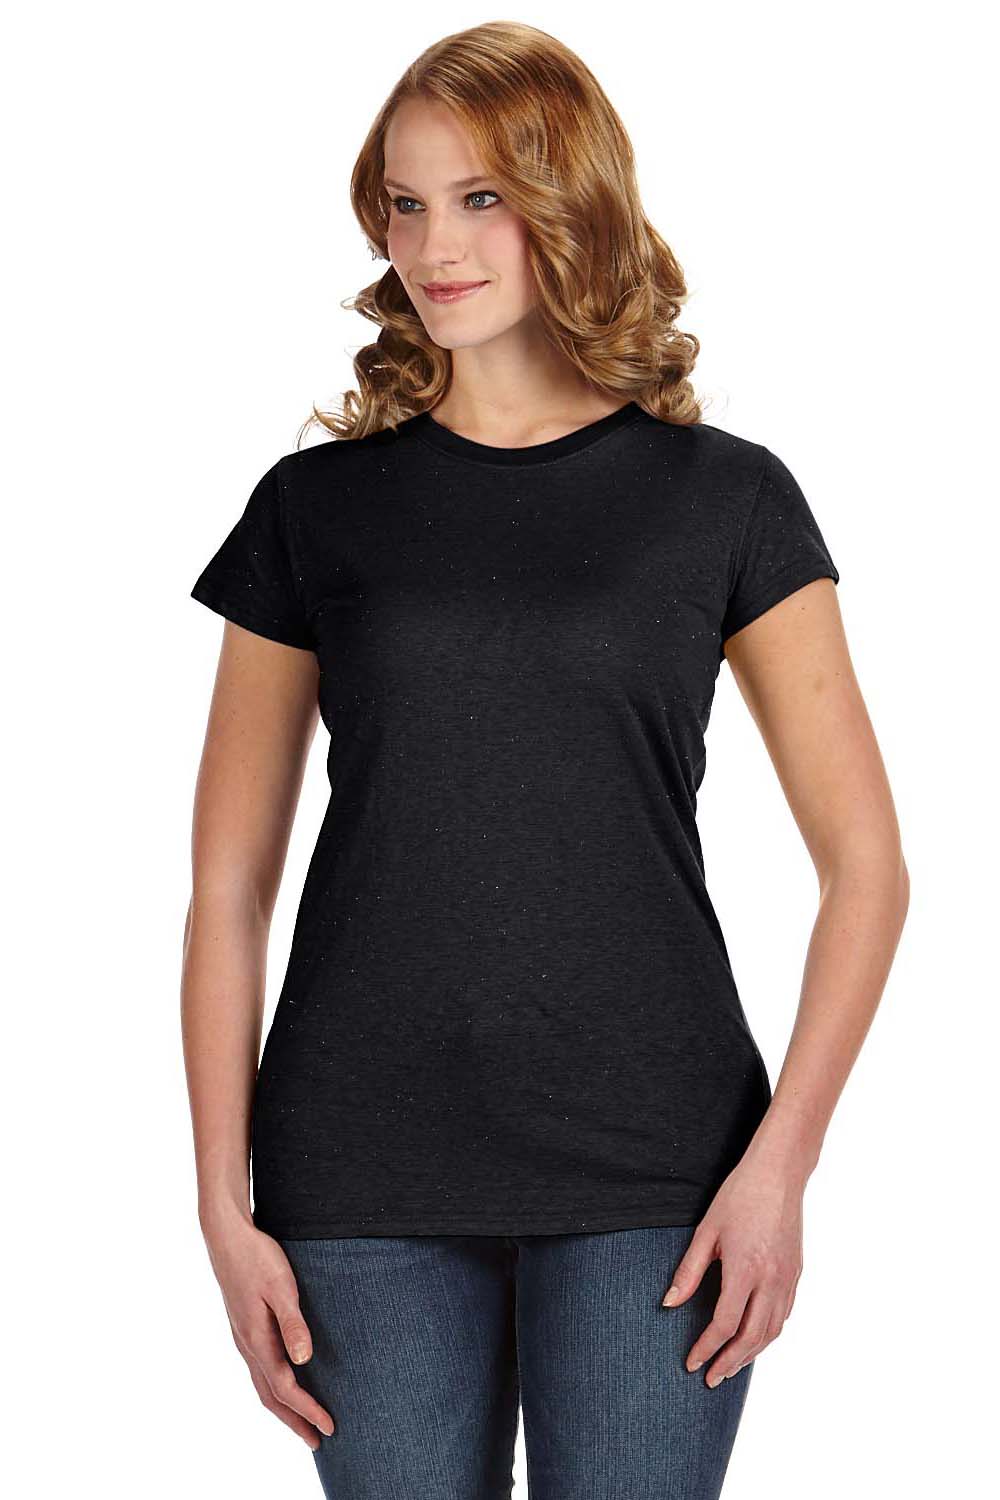 J America JA8138 Womens Glitter Short Sleeve Crewneck T-Shirt Black Front